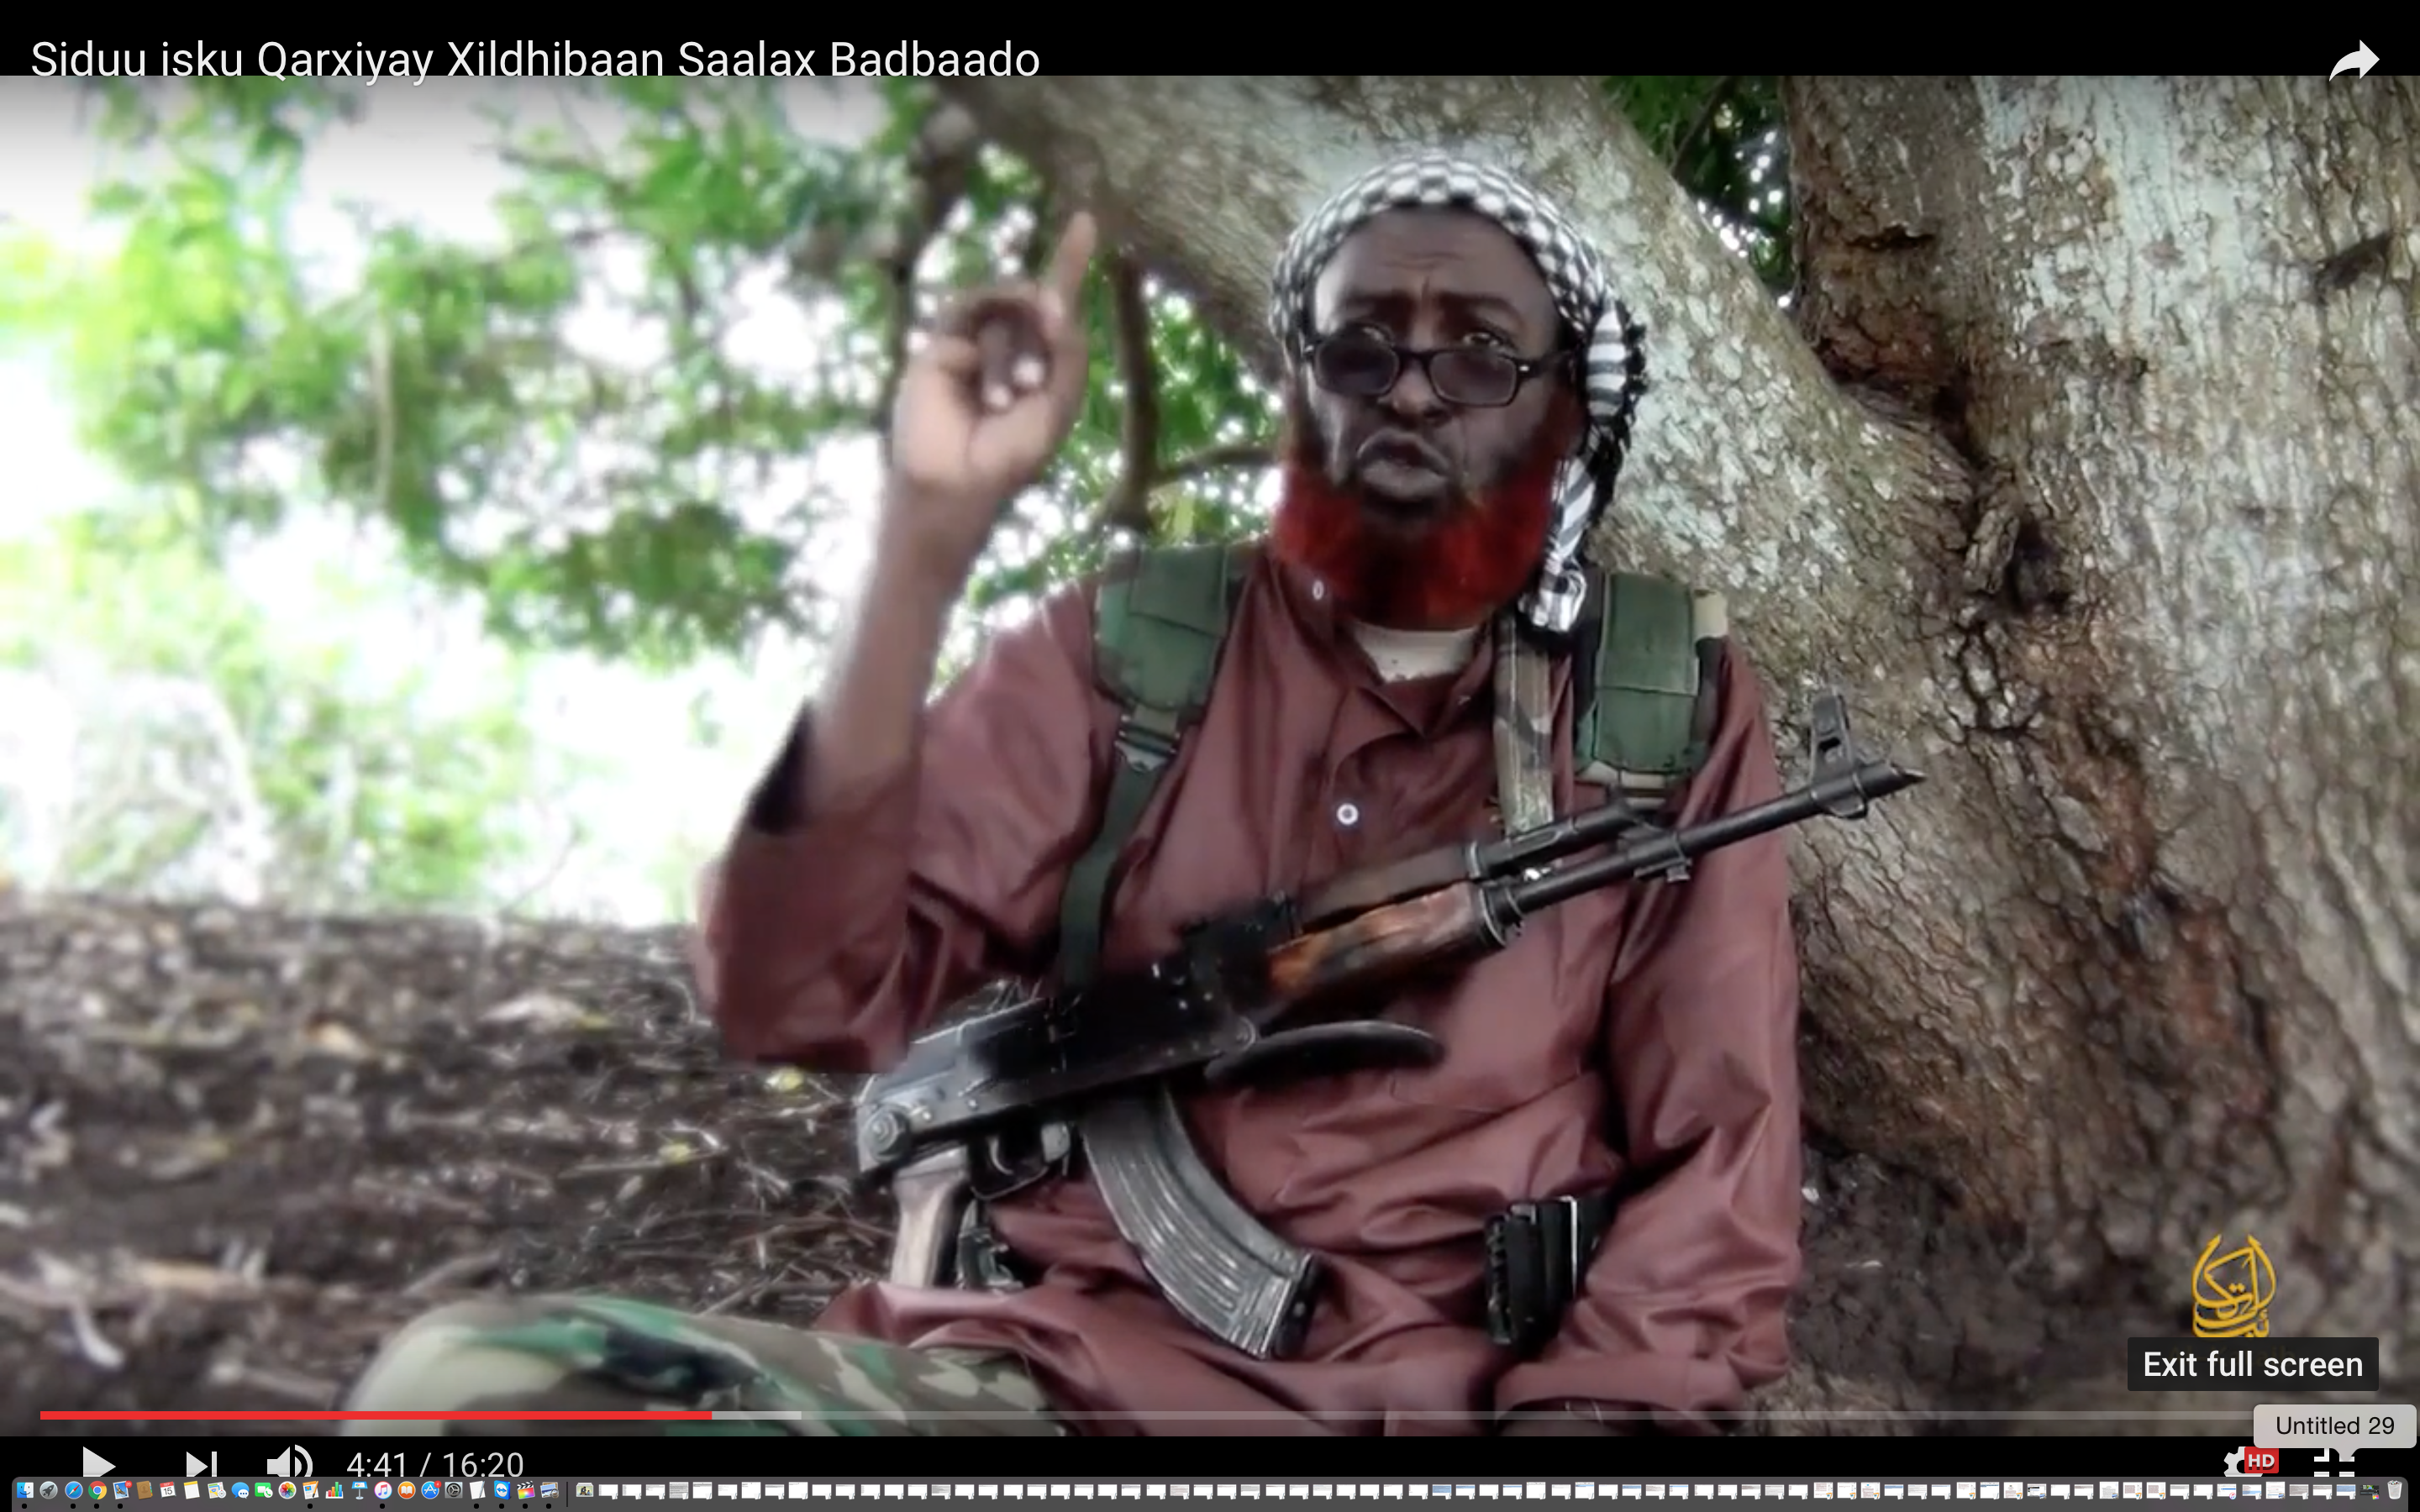 Somalia:Who are behind the killings in Mogadishu?